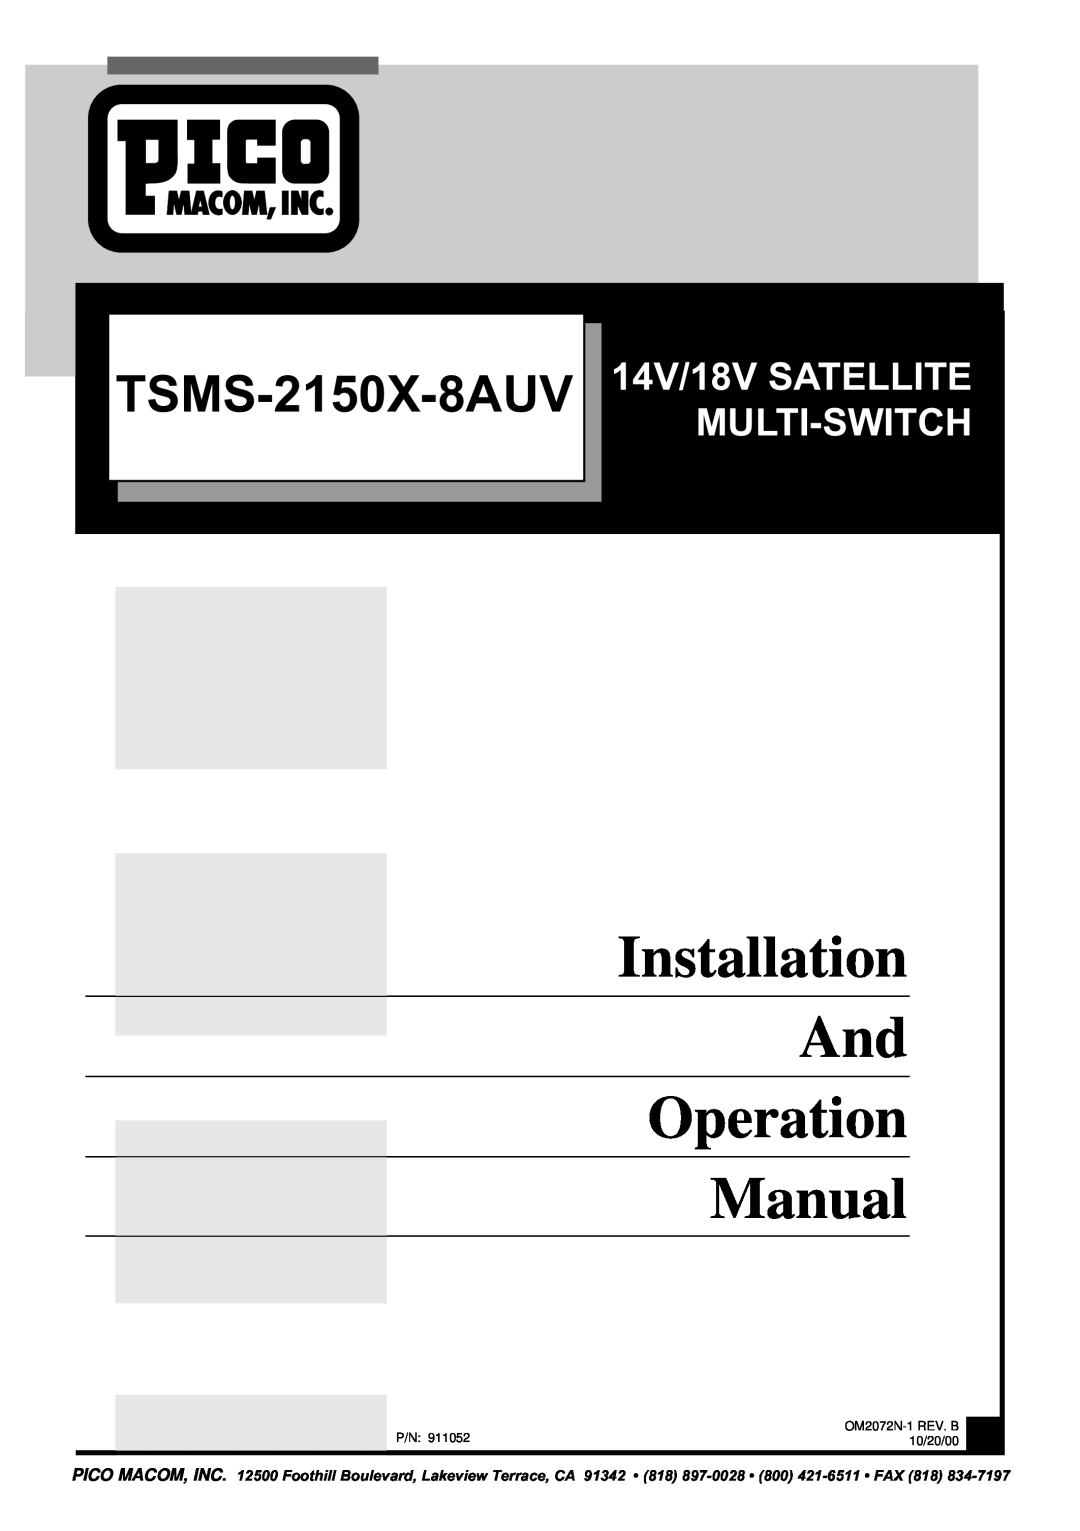 Pico Communications TSMS-2150X-8AUV operation manual Installation And Operation Manual, 14V/18V SATELLITE MULTI-SWITCH 